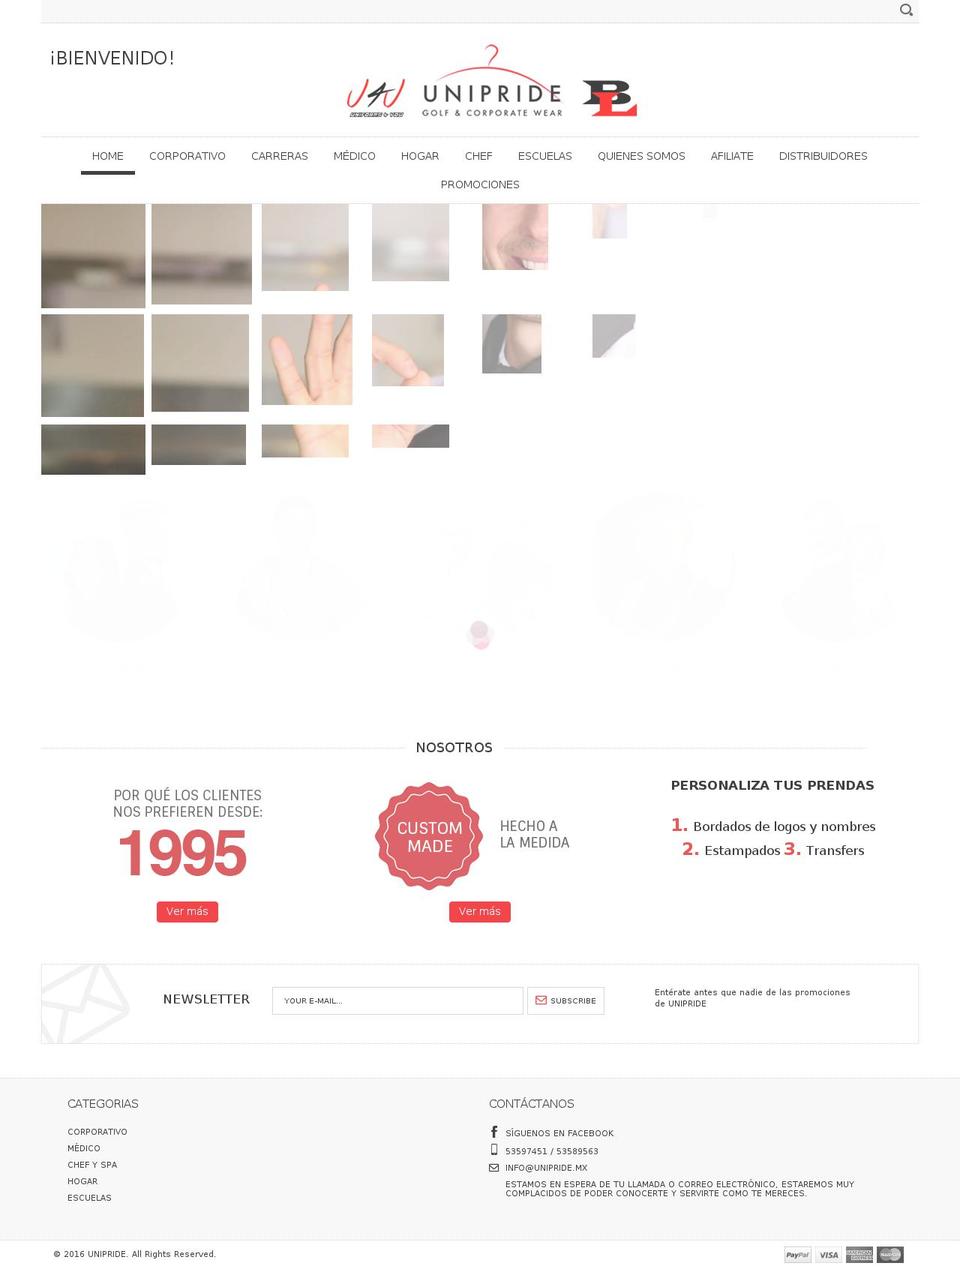 unipride.mx shopify website screenshot